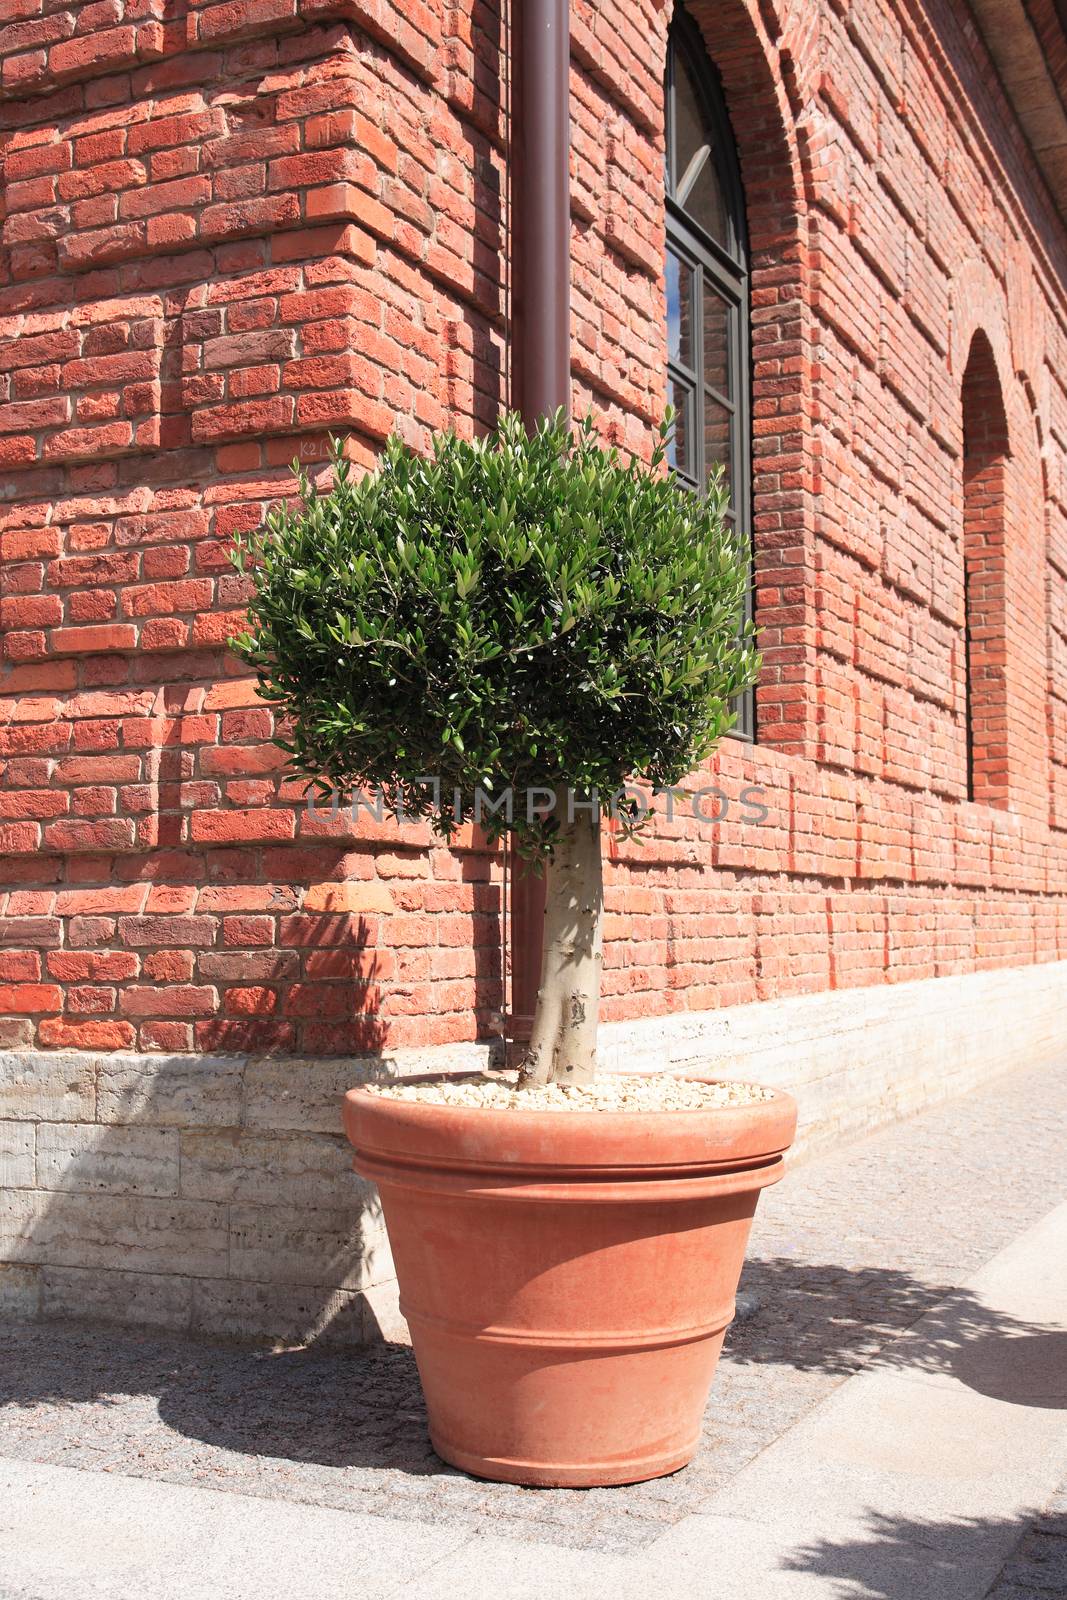 Nice plant in big clay pot near old brick building under sunlight